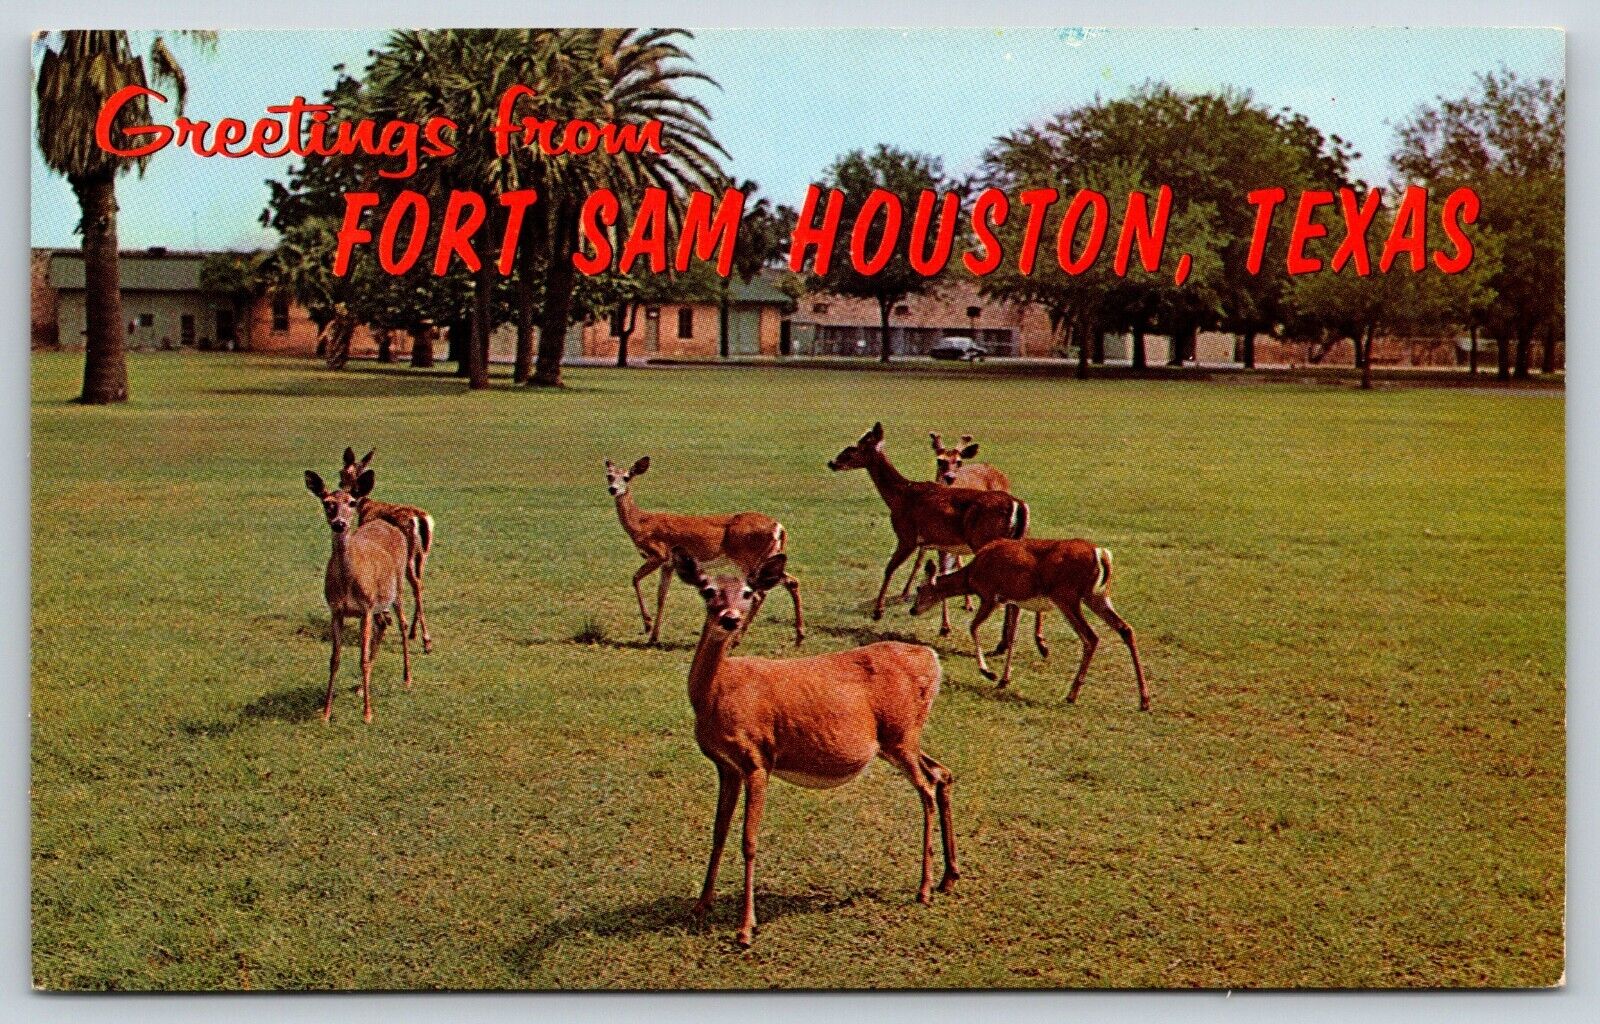 Greetings from Fort Sam Houston Postcard Houston TX Tame Deer in Quad